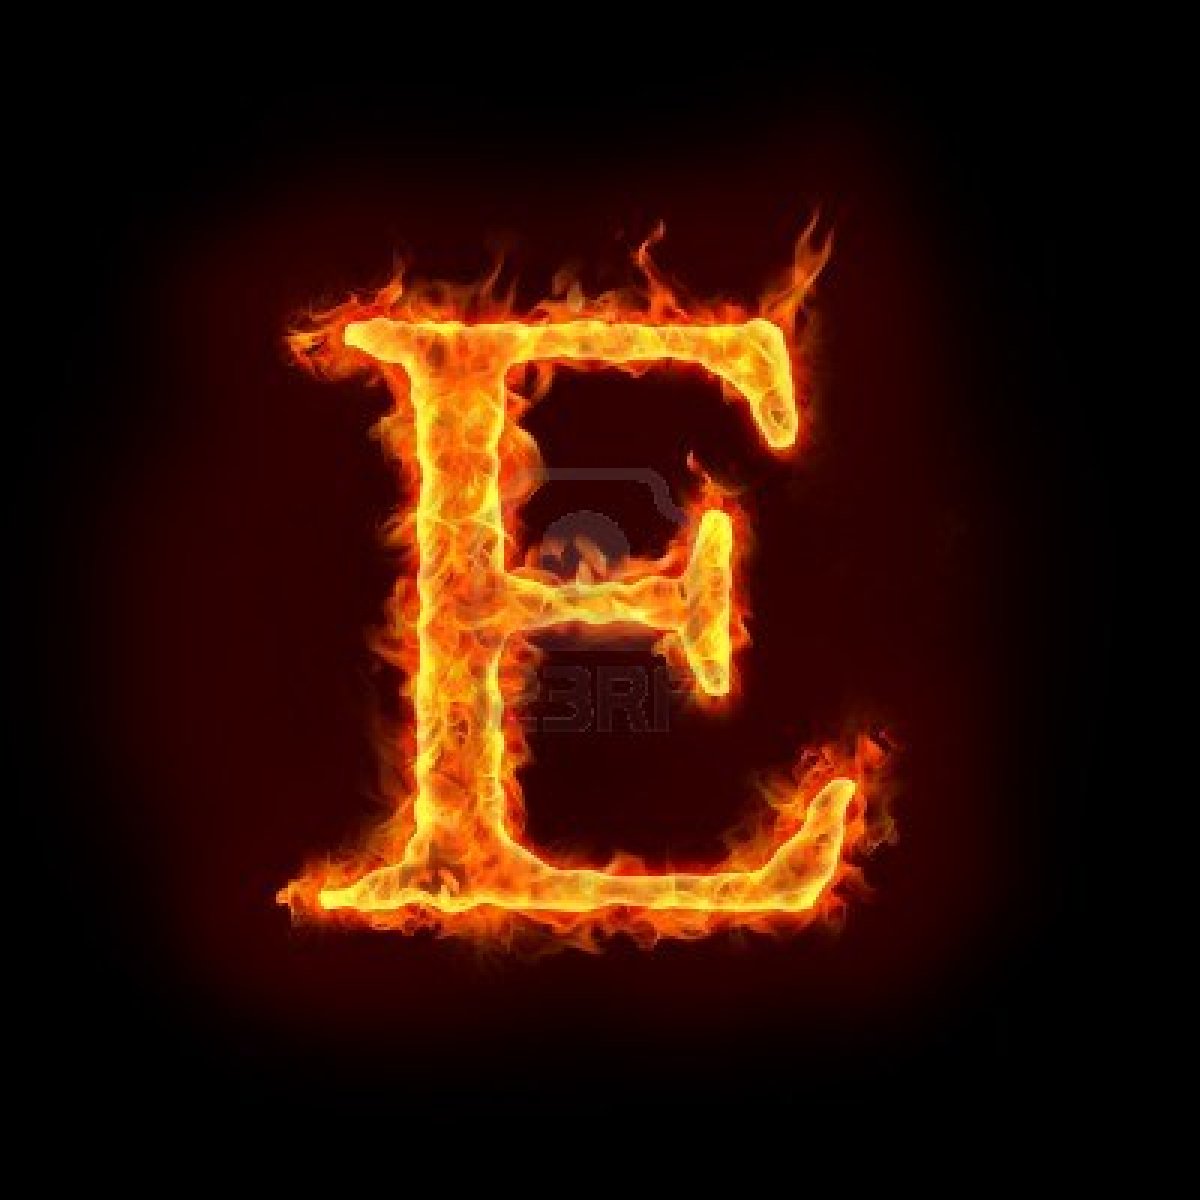 10232901-fire-alphabets-in-flame-letter-e.jpg